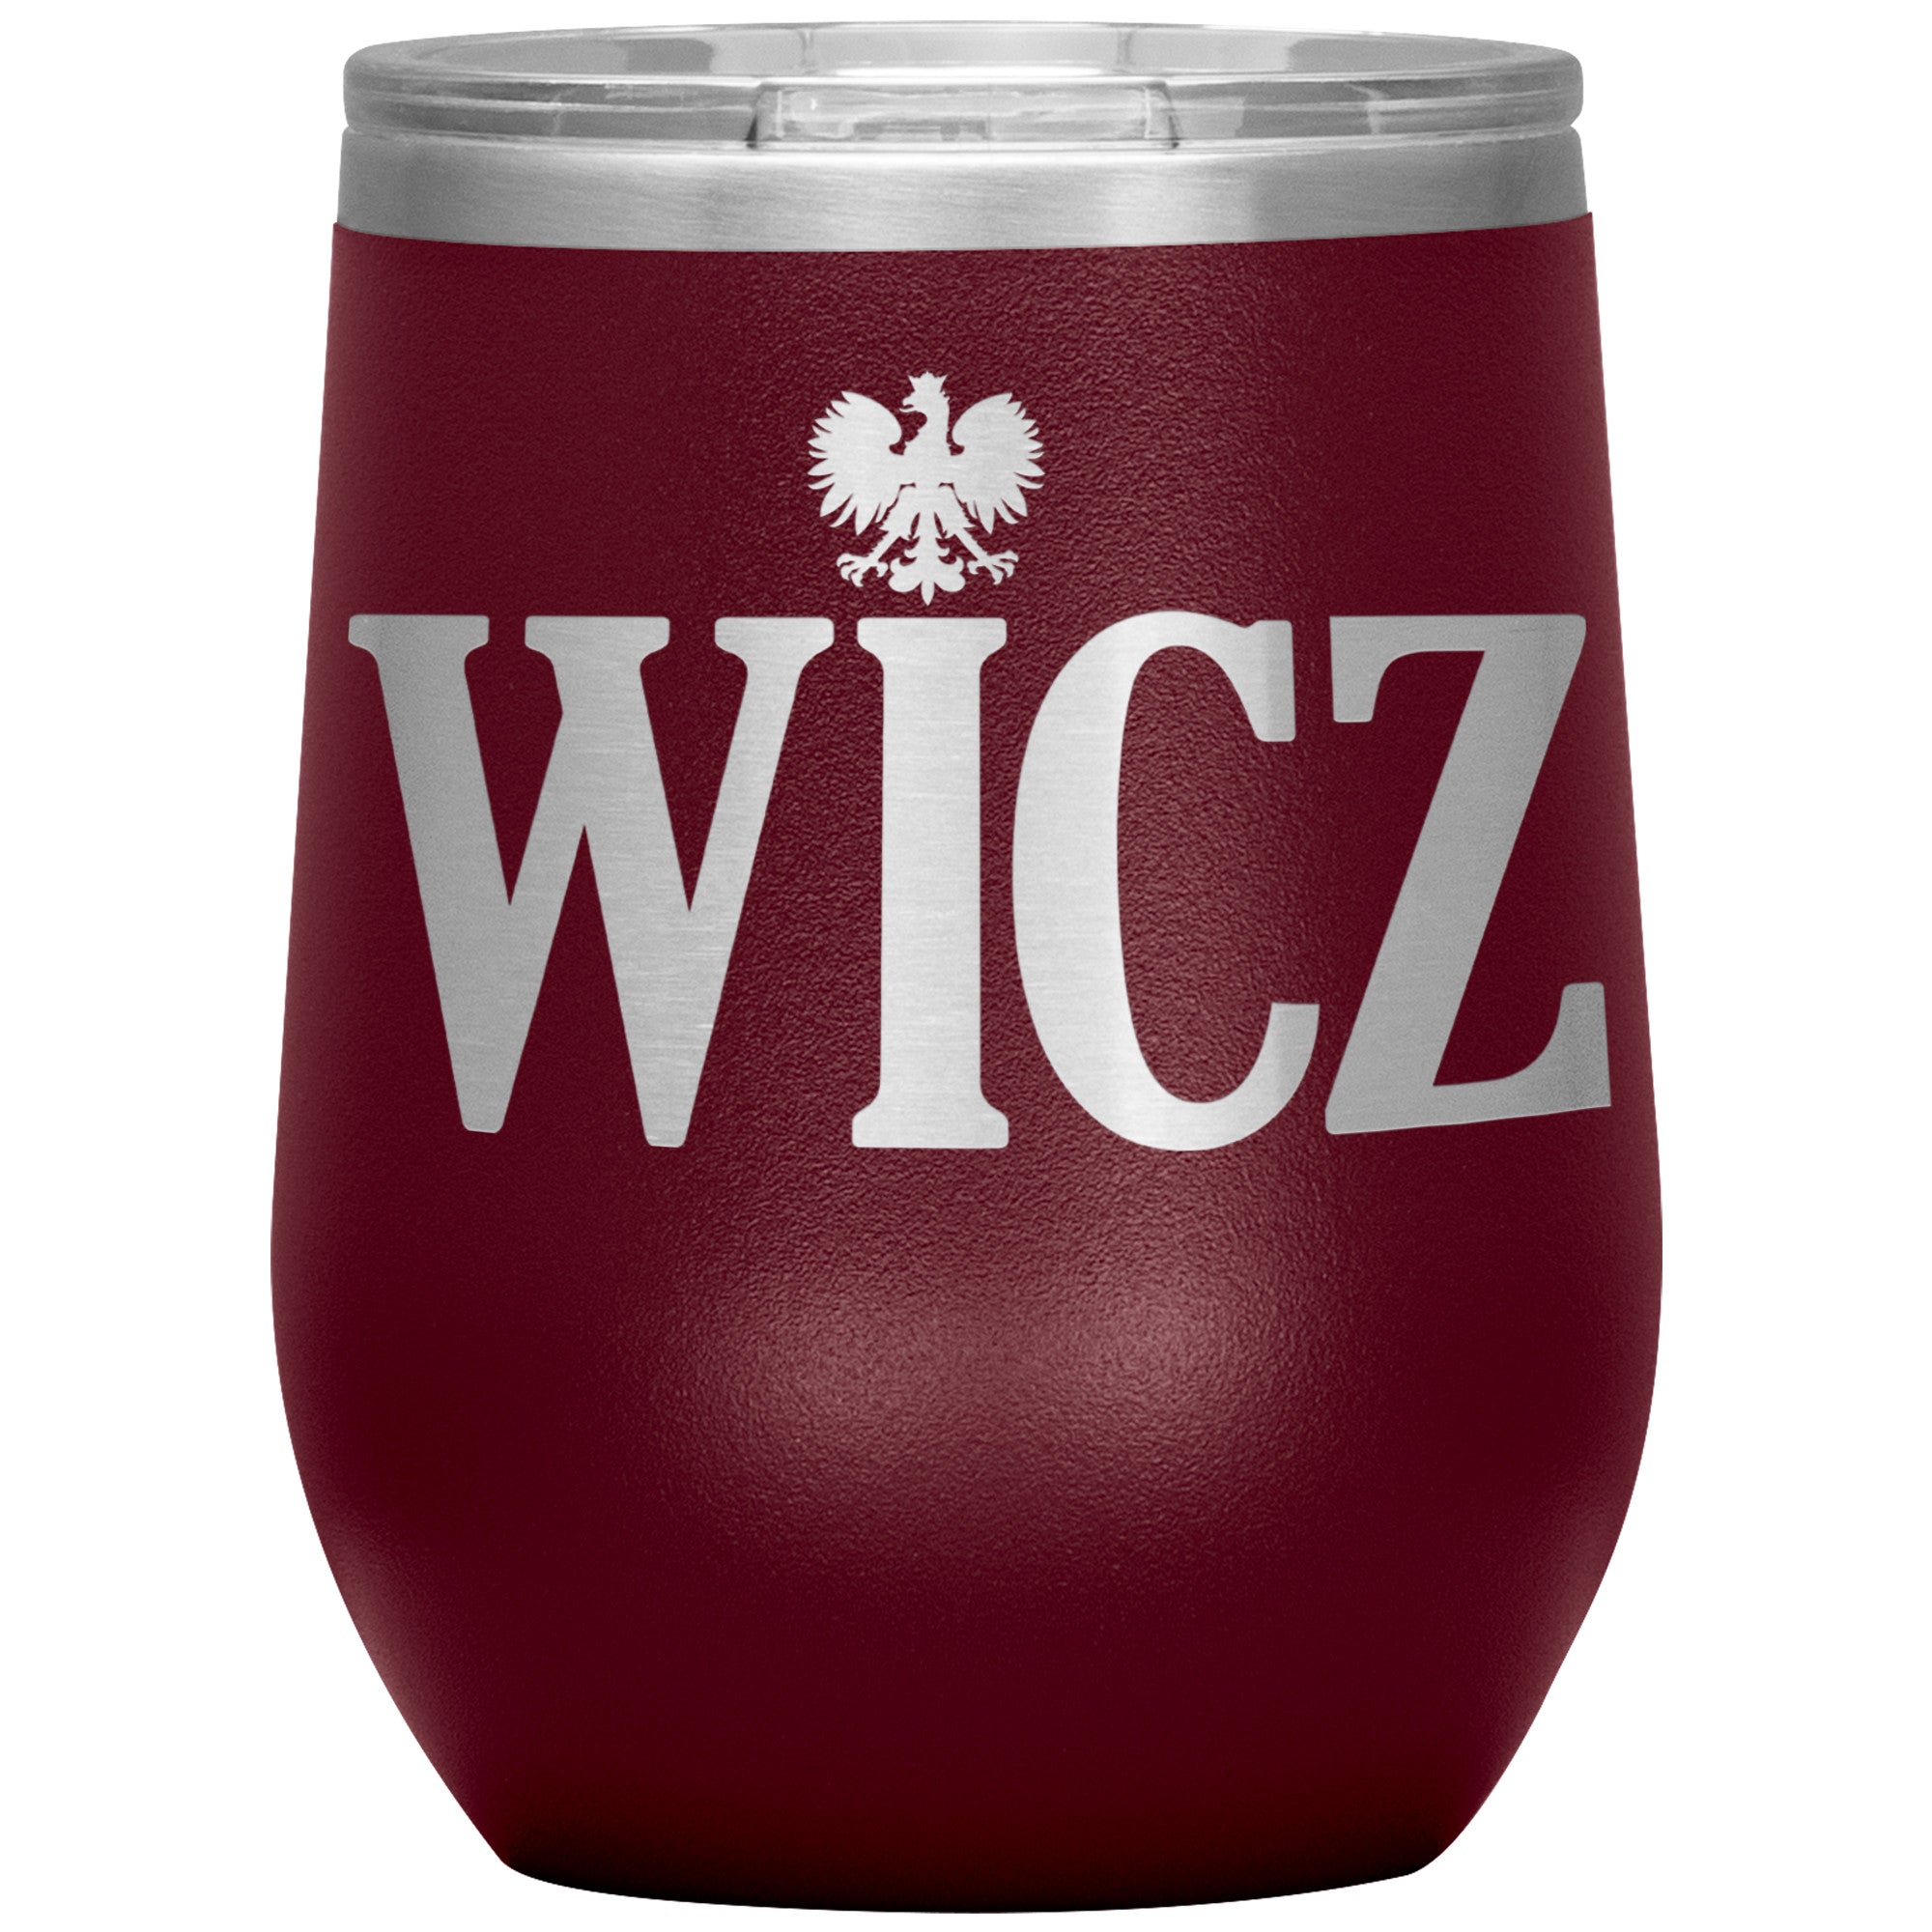 Polish Surname Ending in WICZ Insulated Wine Tumbler Tumblers teelaunch Maroon  